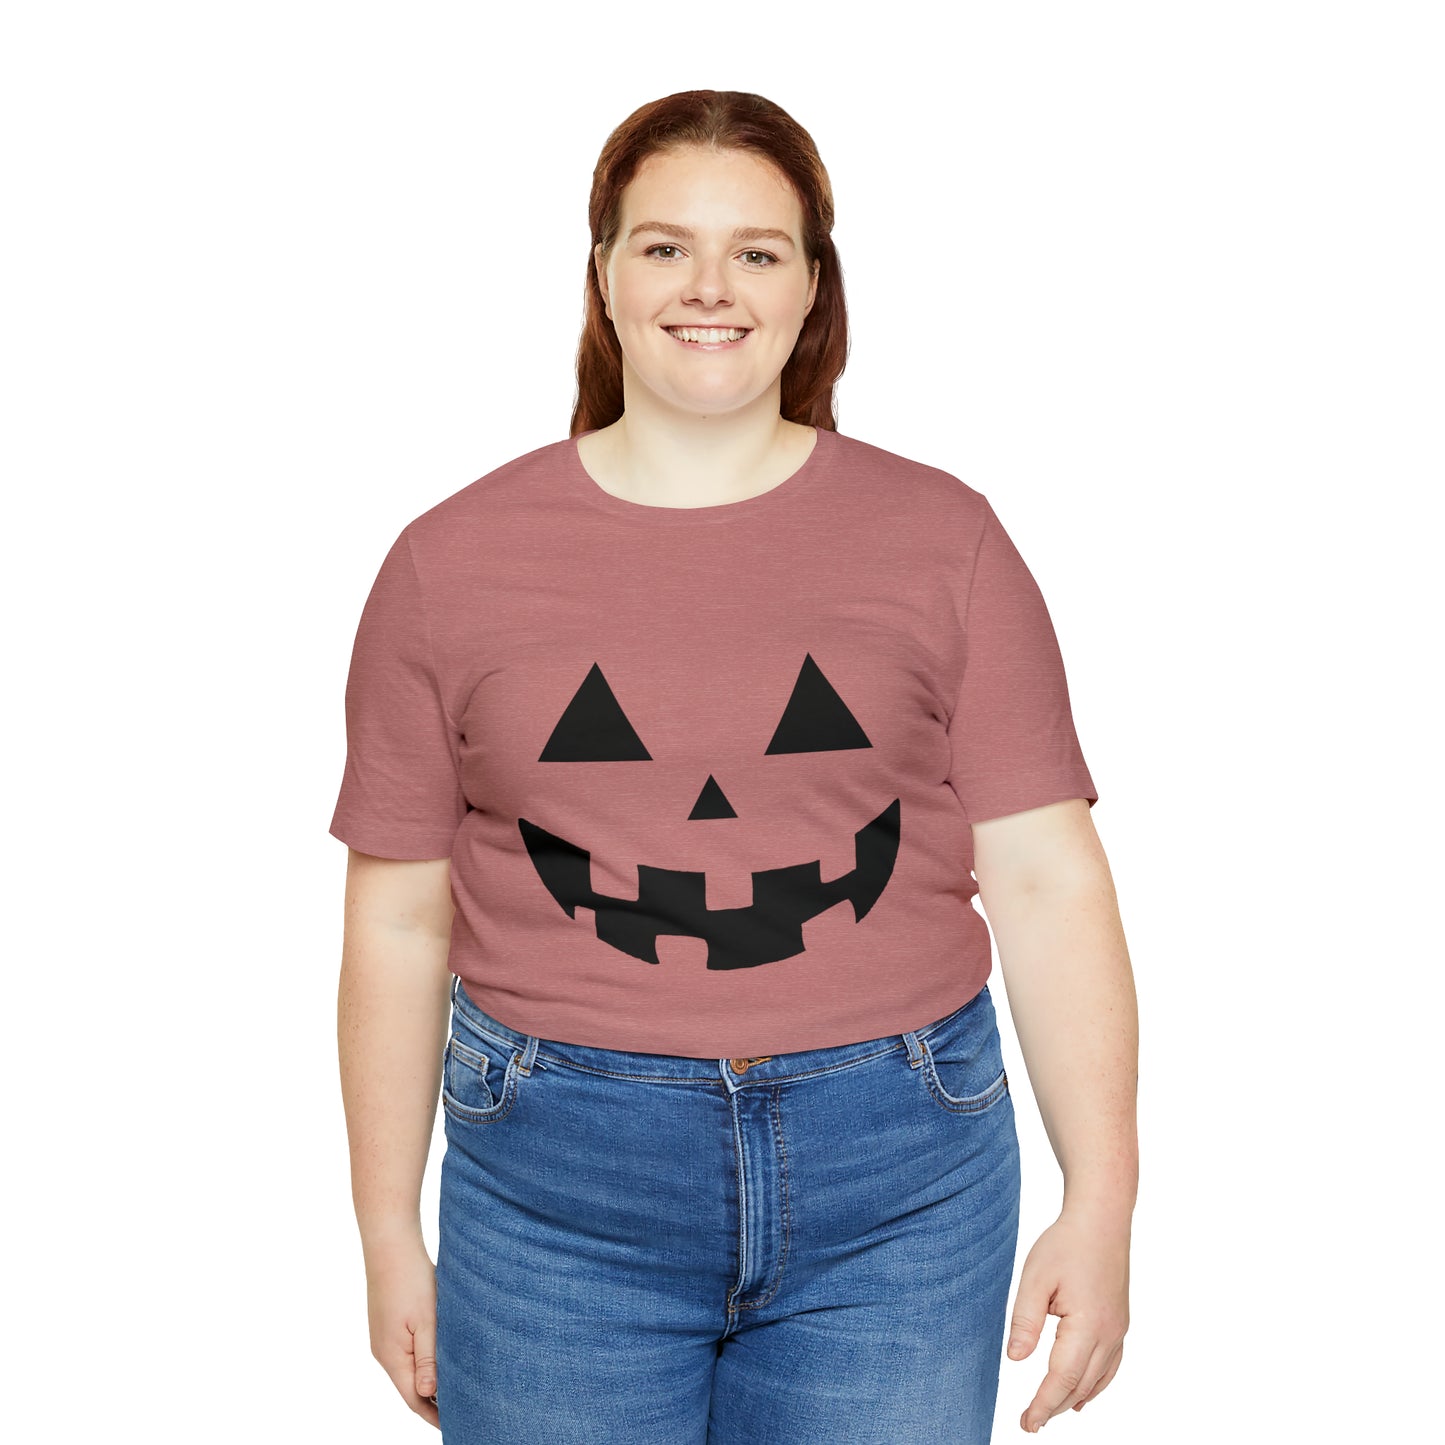 Halloween Pumpkin Faces Scary Faces, Pumpkin Silhouette, Vintage Shirt Halloween Shirt Pumpkin Face Halloween Costume